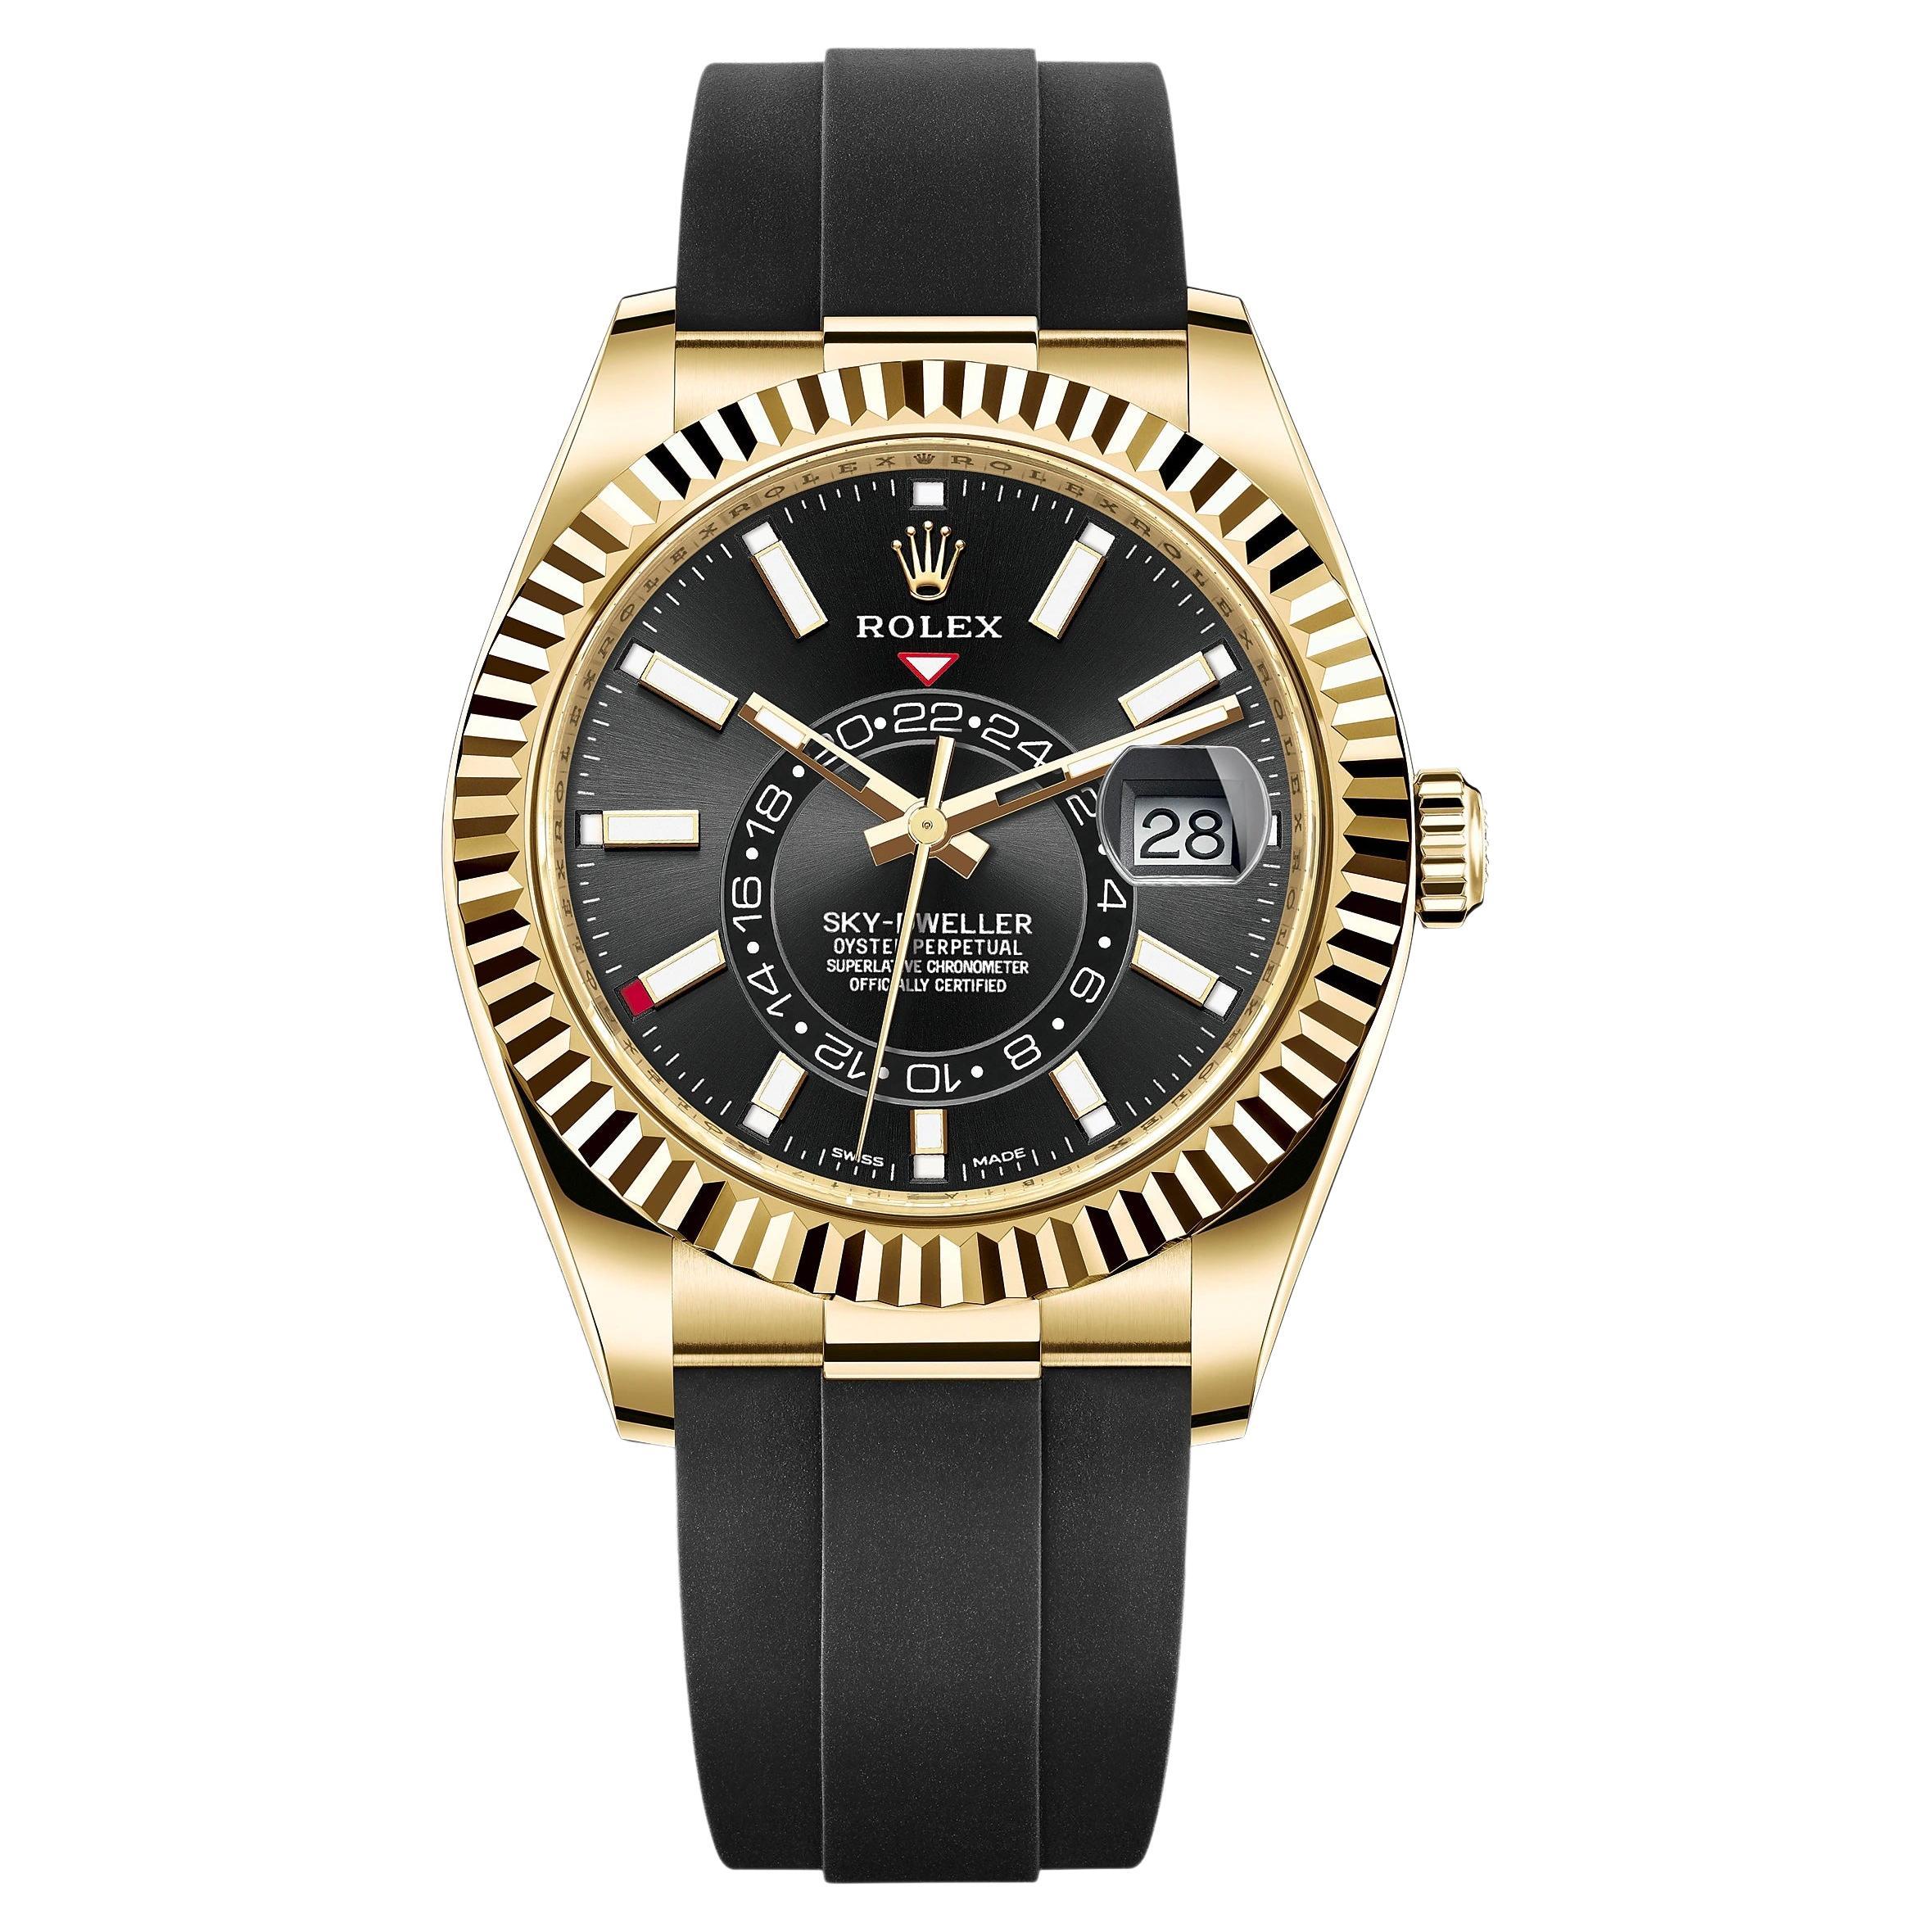 Rolex Sky-Dweller, 18k Yellow Gold, Black, Ref# 326238, Unworn Watch, 2021 For Sale